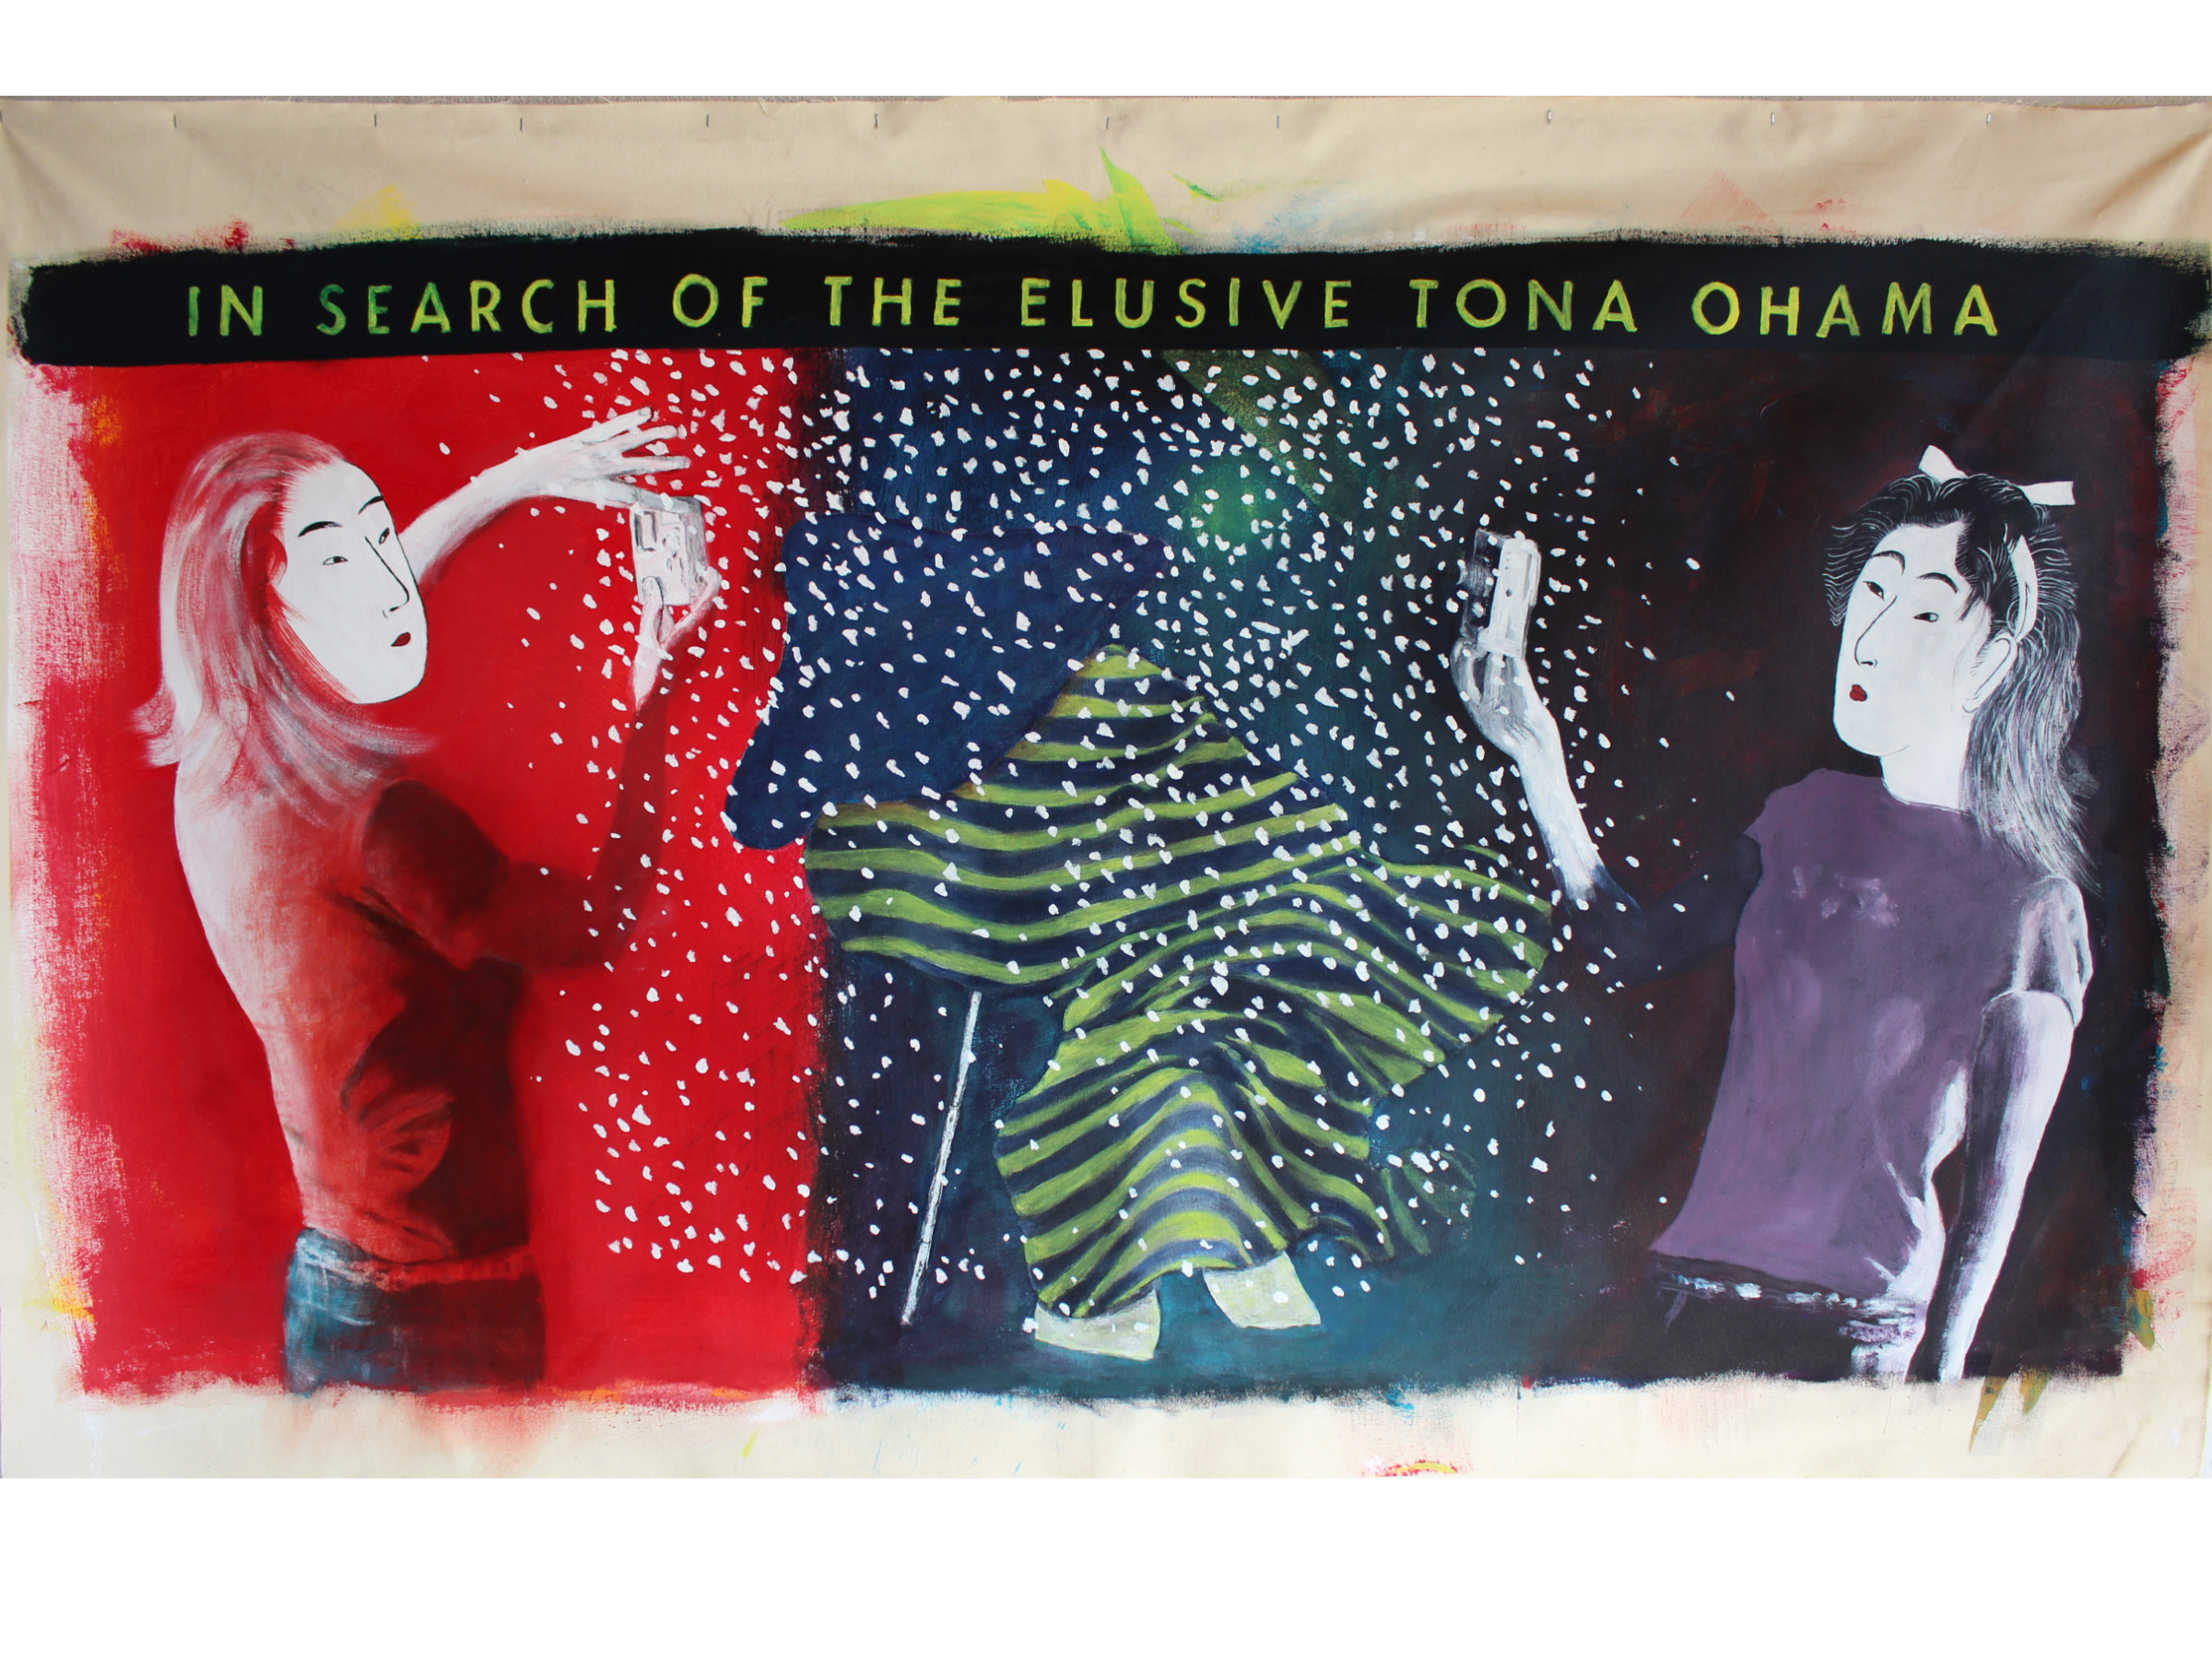 In Search of the Elusive Tona Ohama